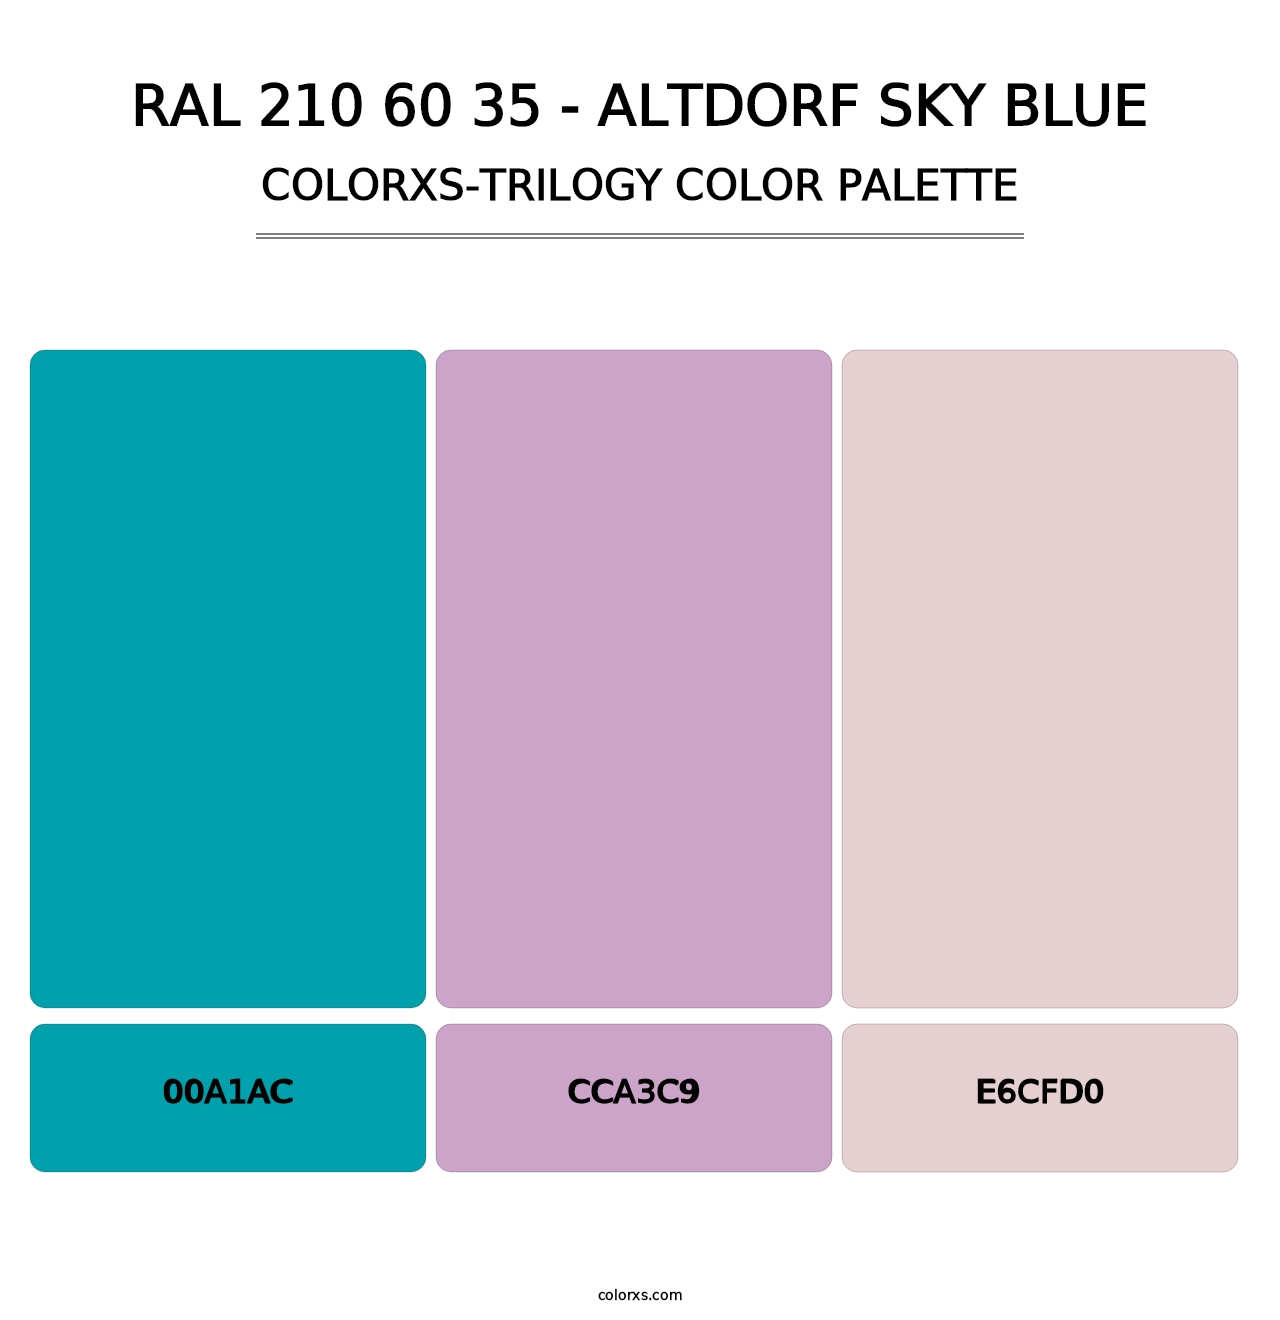 RAL 210 60 35 - Altdorf Sky Blue - Colorxs Trilogy Palette